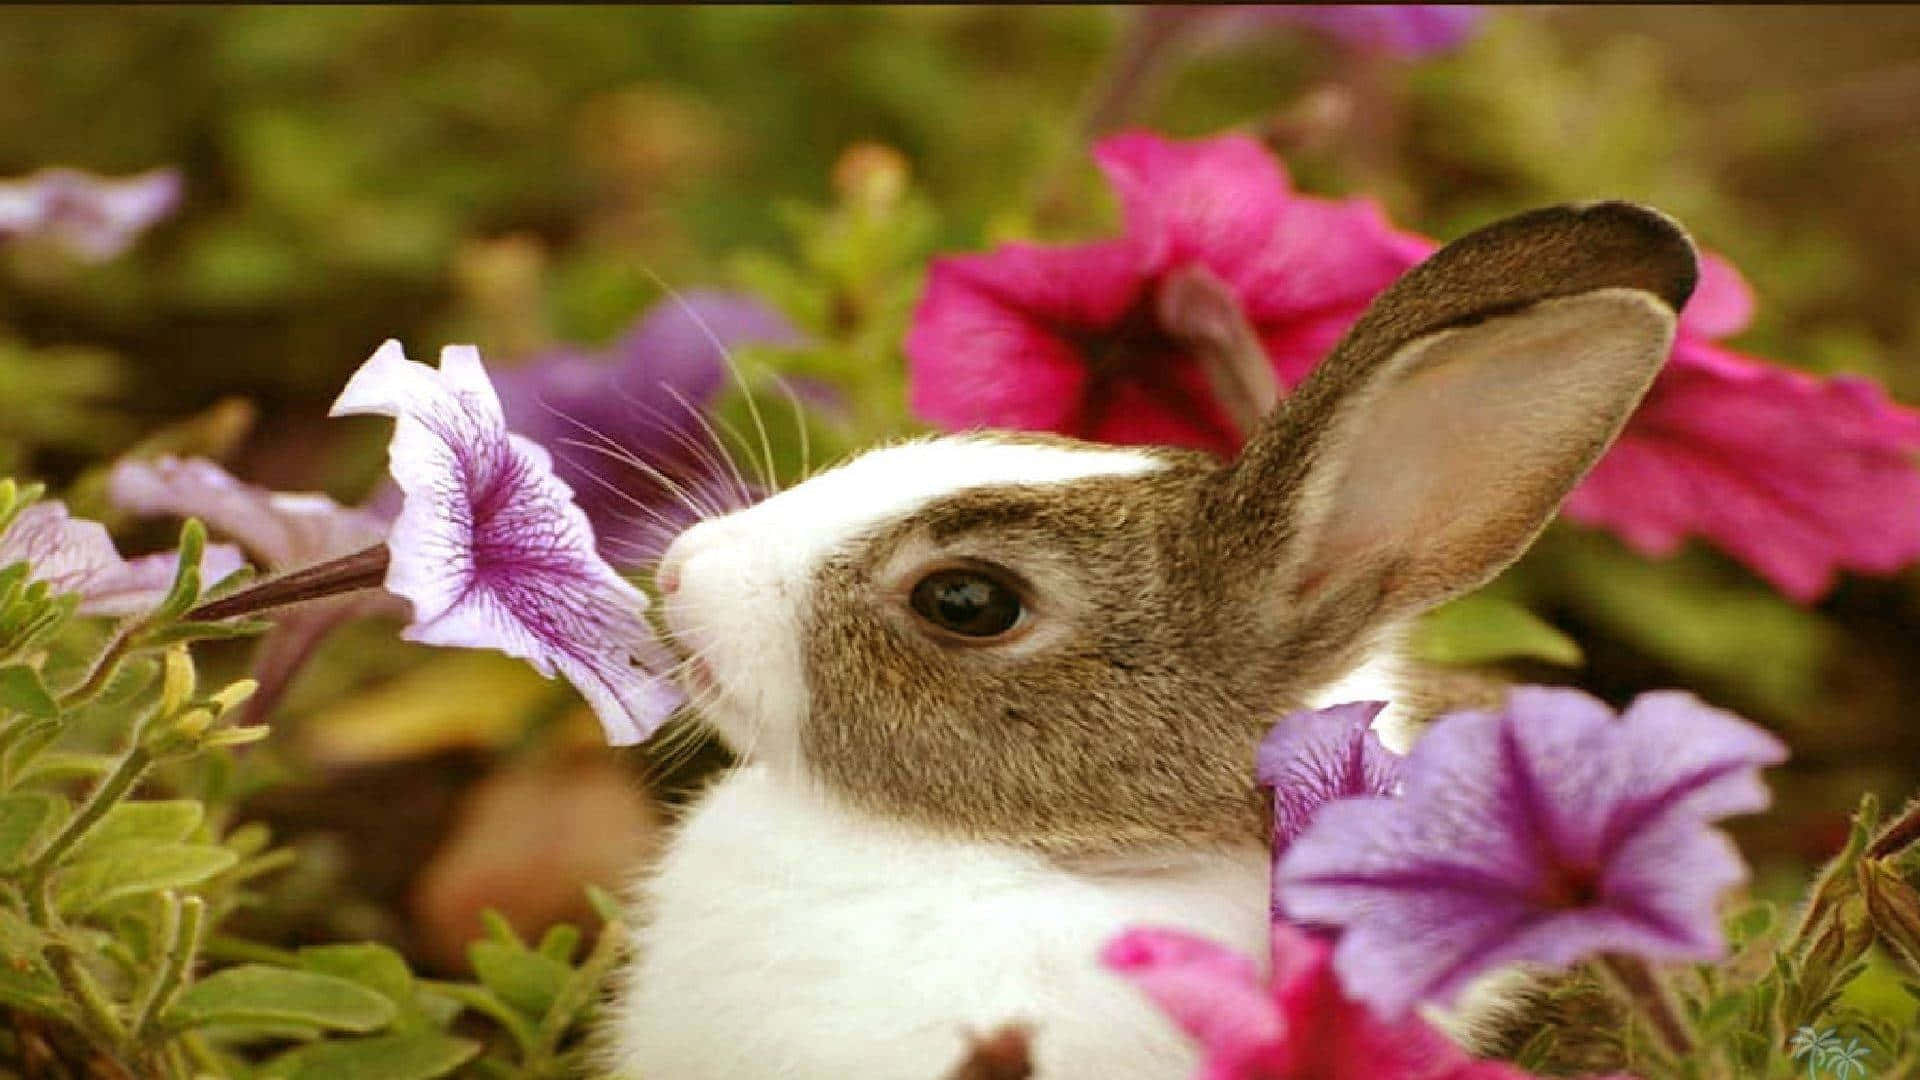 Cute Bunny Enjoying Some Grass